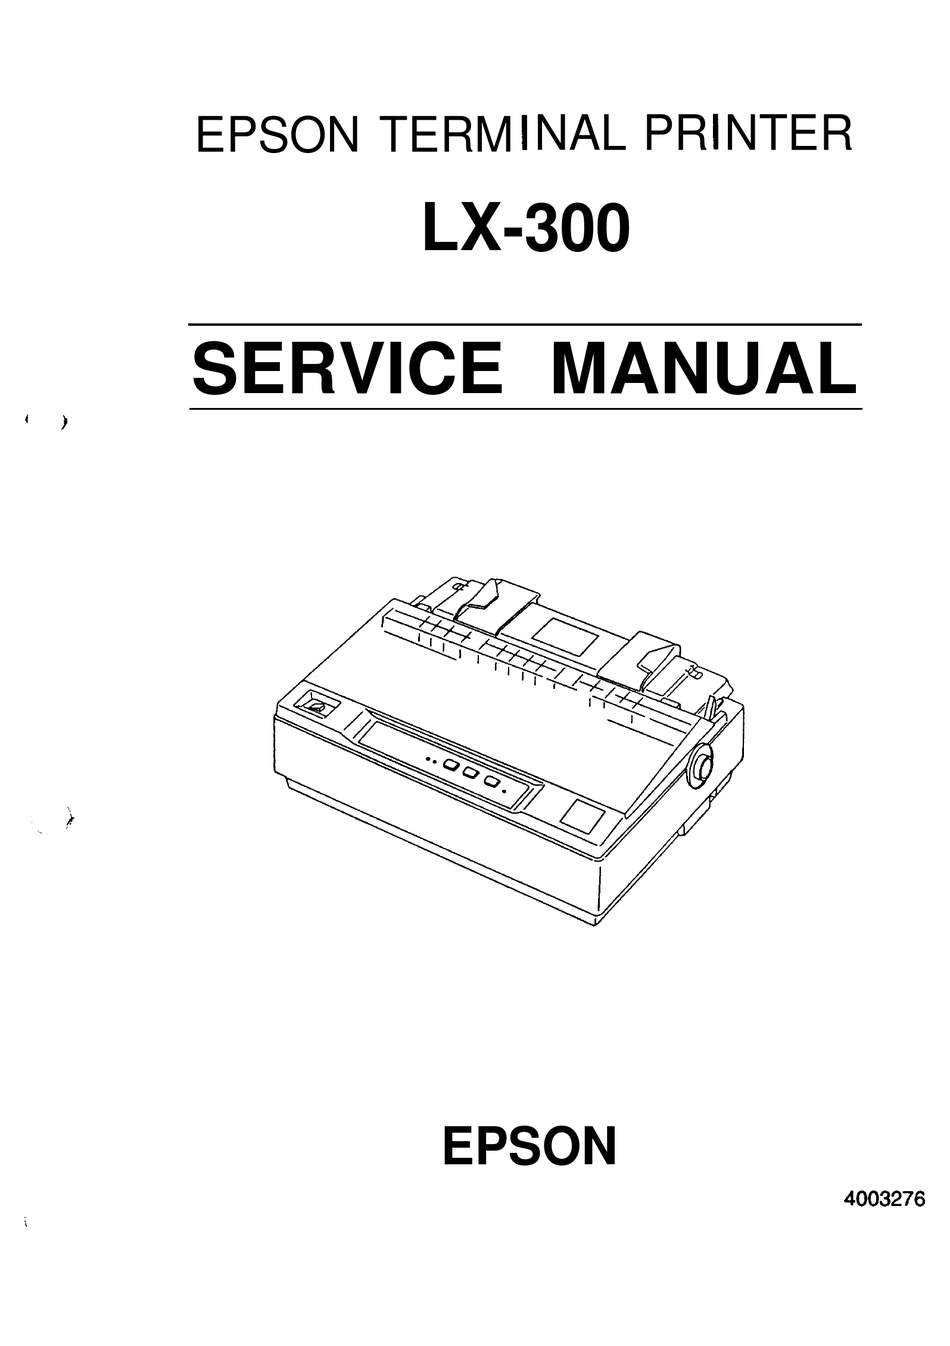 Epson lx 300 ii driver windows 7 - lasopasource